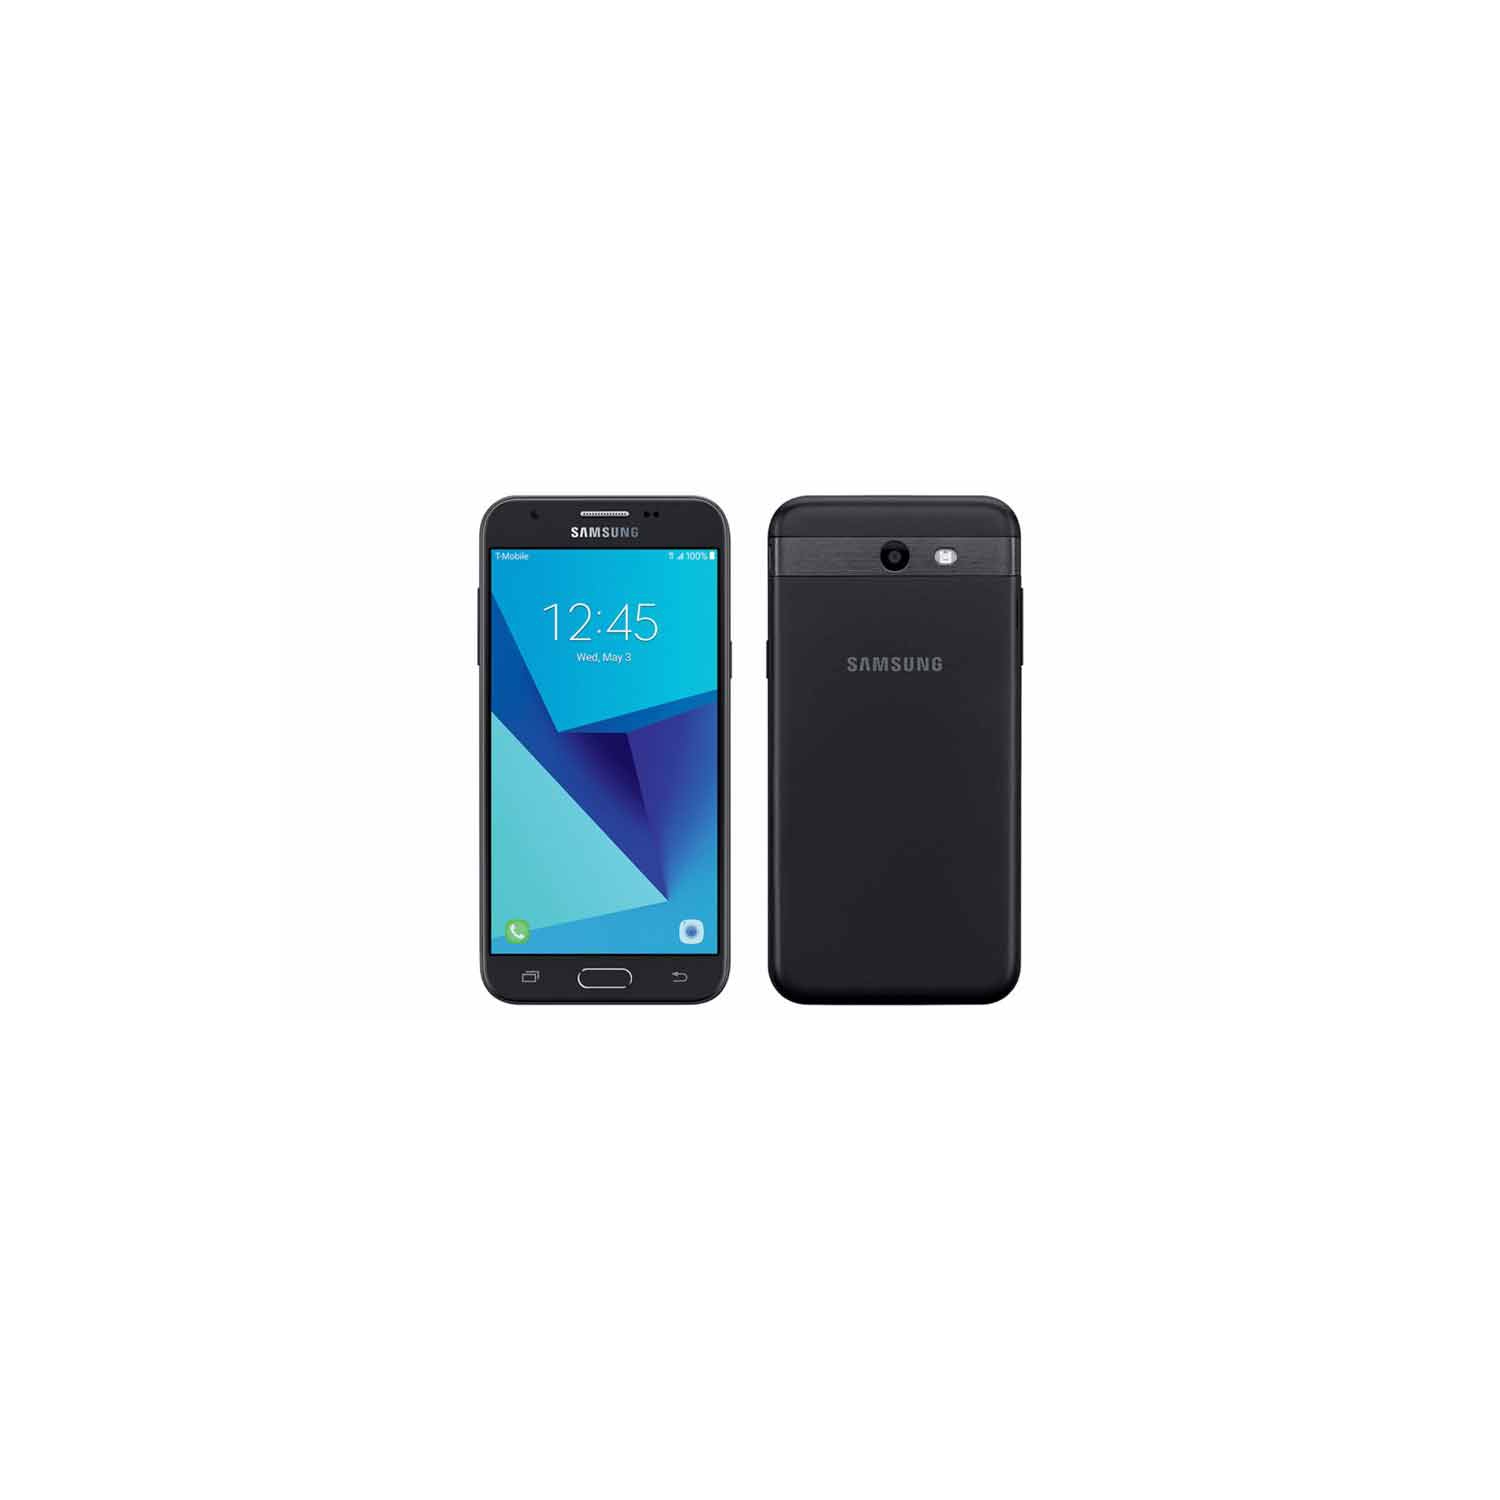 Samsung Galaxy J3 Prime SM-J327W 16GB Black (Unlocked) - Open Box